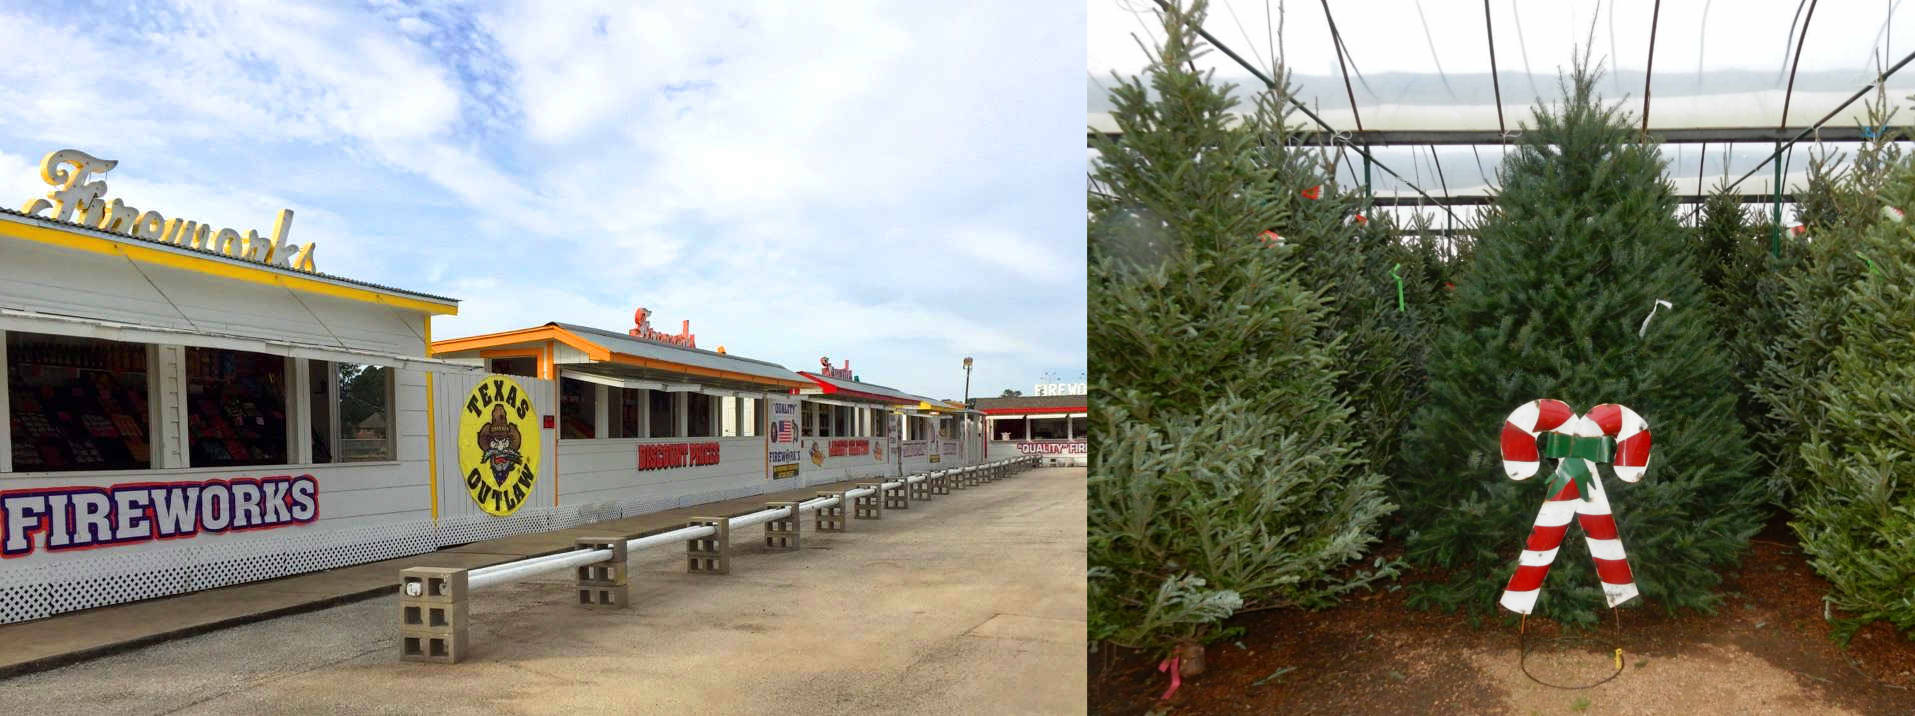 Seasonal Items like Christmas Trees, Fireworks, Grass at J&J Nursery, Spring, TX.